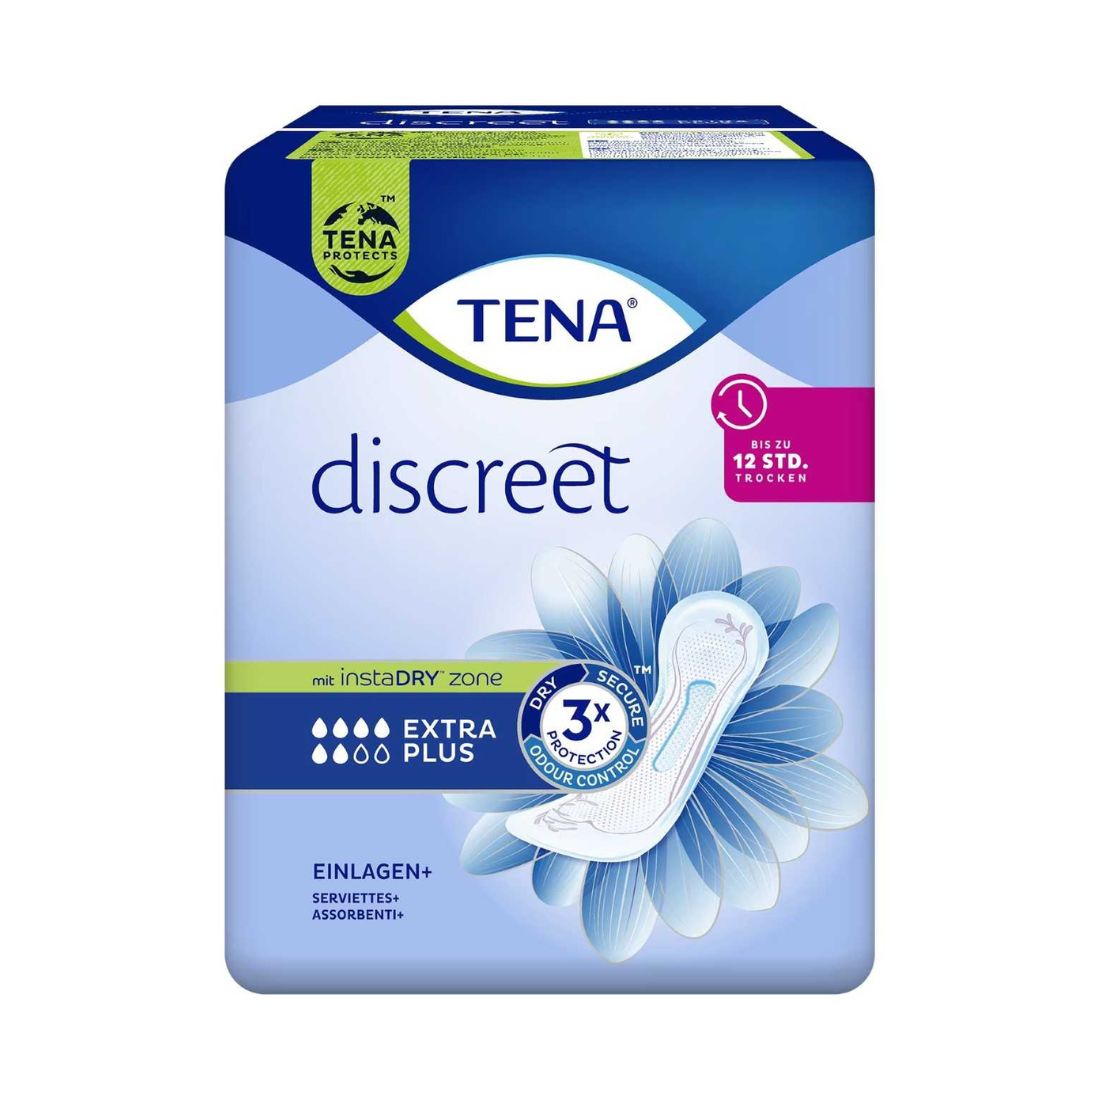 TENA Lady Discreet Extra Plus, Einlage, Beutel (1 x 16 Stück)